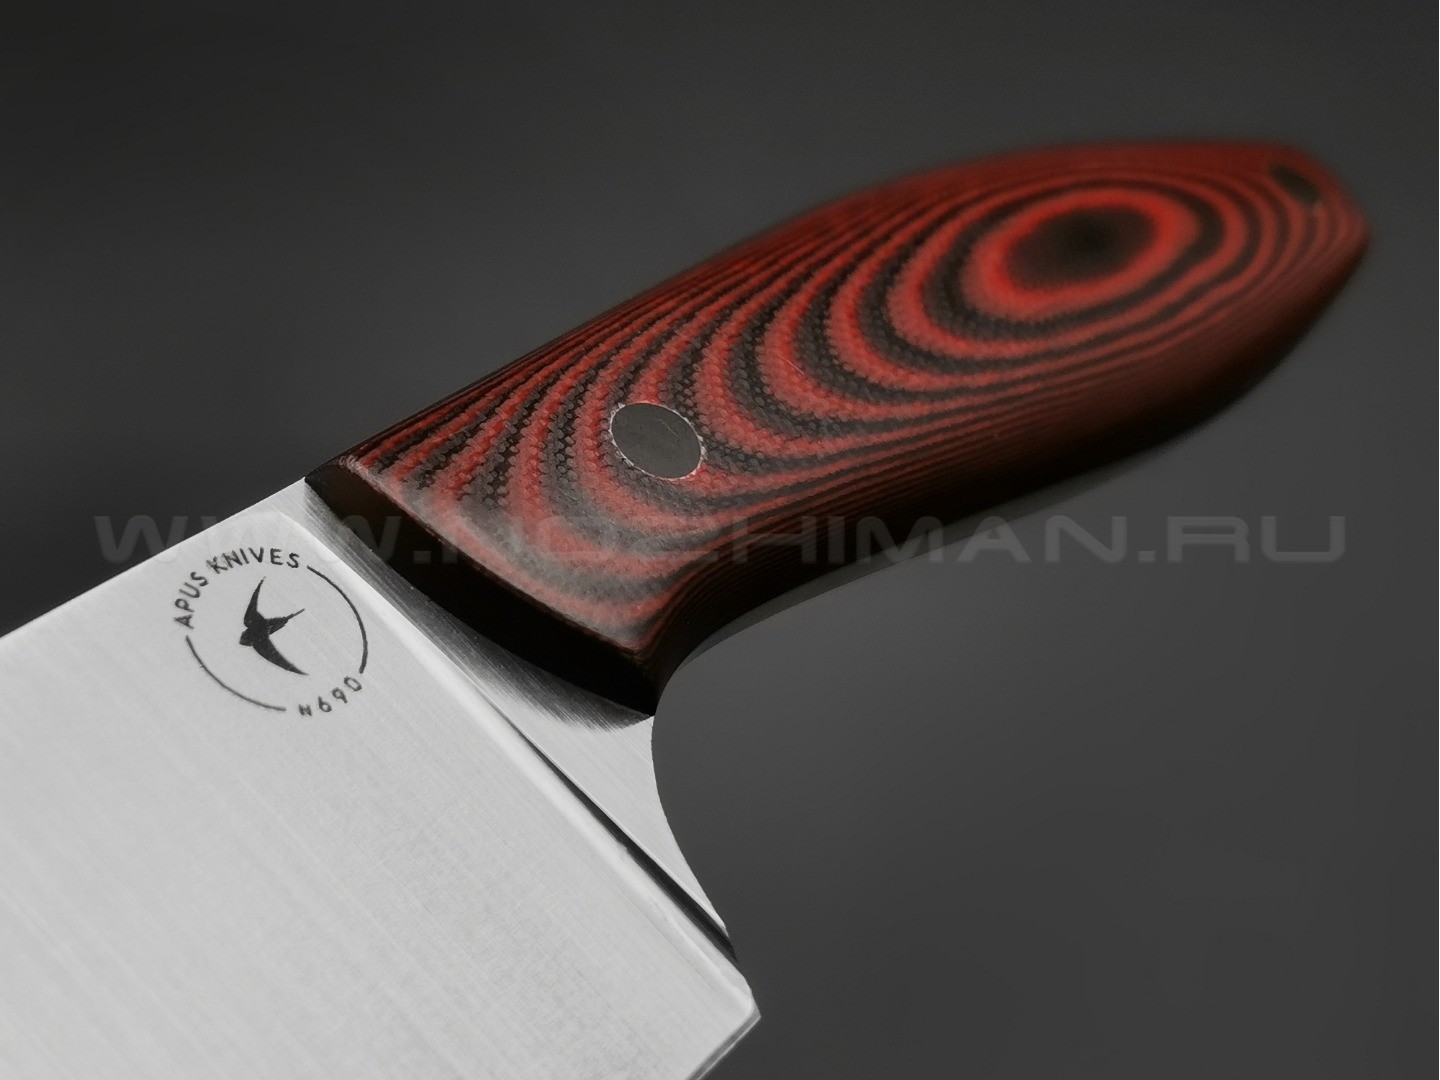 Apus Knives нож Shef-M сталь N690, рукоять G10 Red & Black